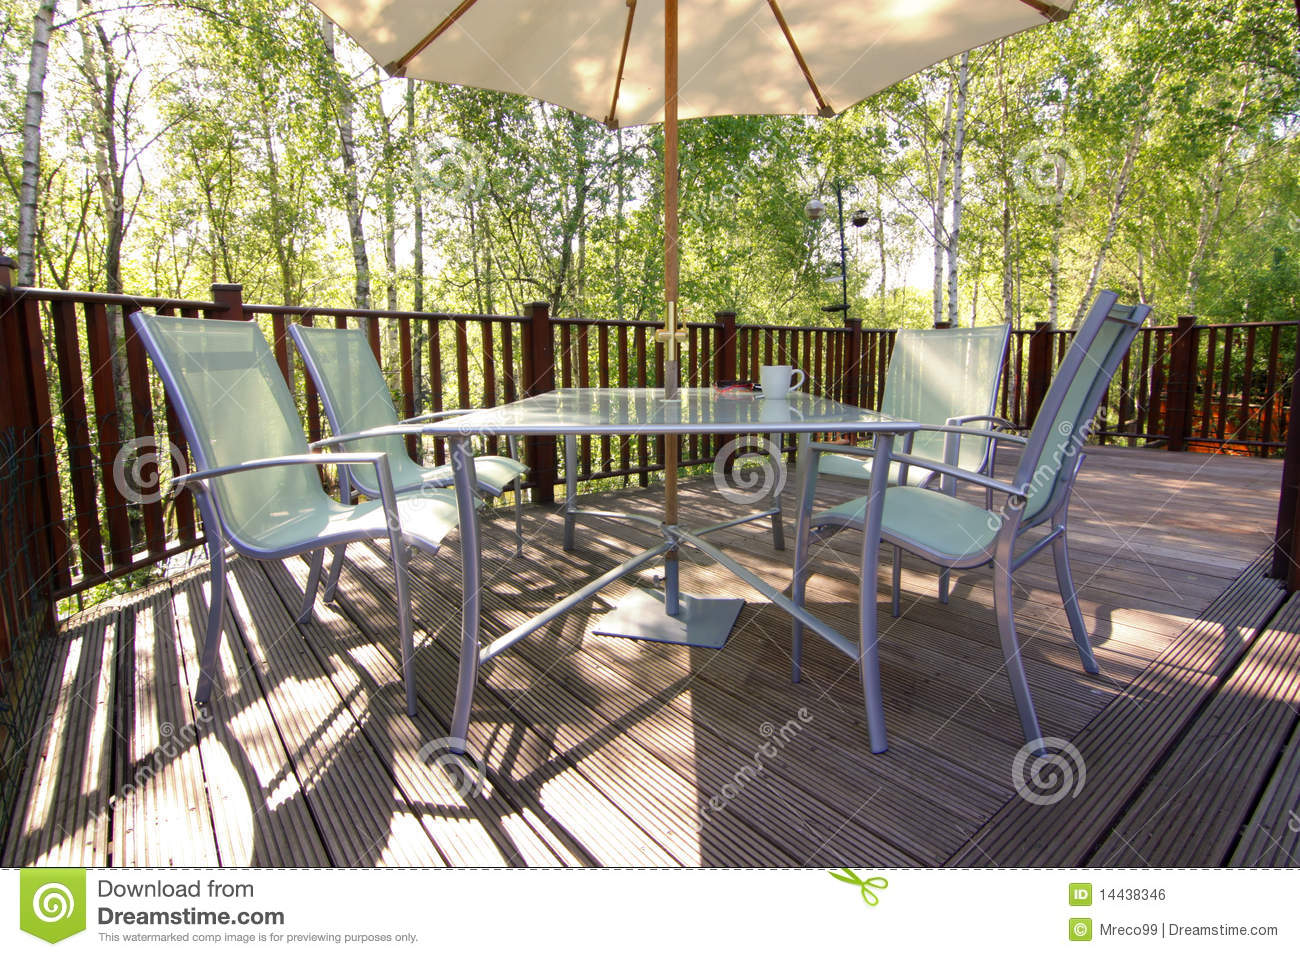 Woodland Deck And Patio Set Royalty Free Stock Image   Image  14438346